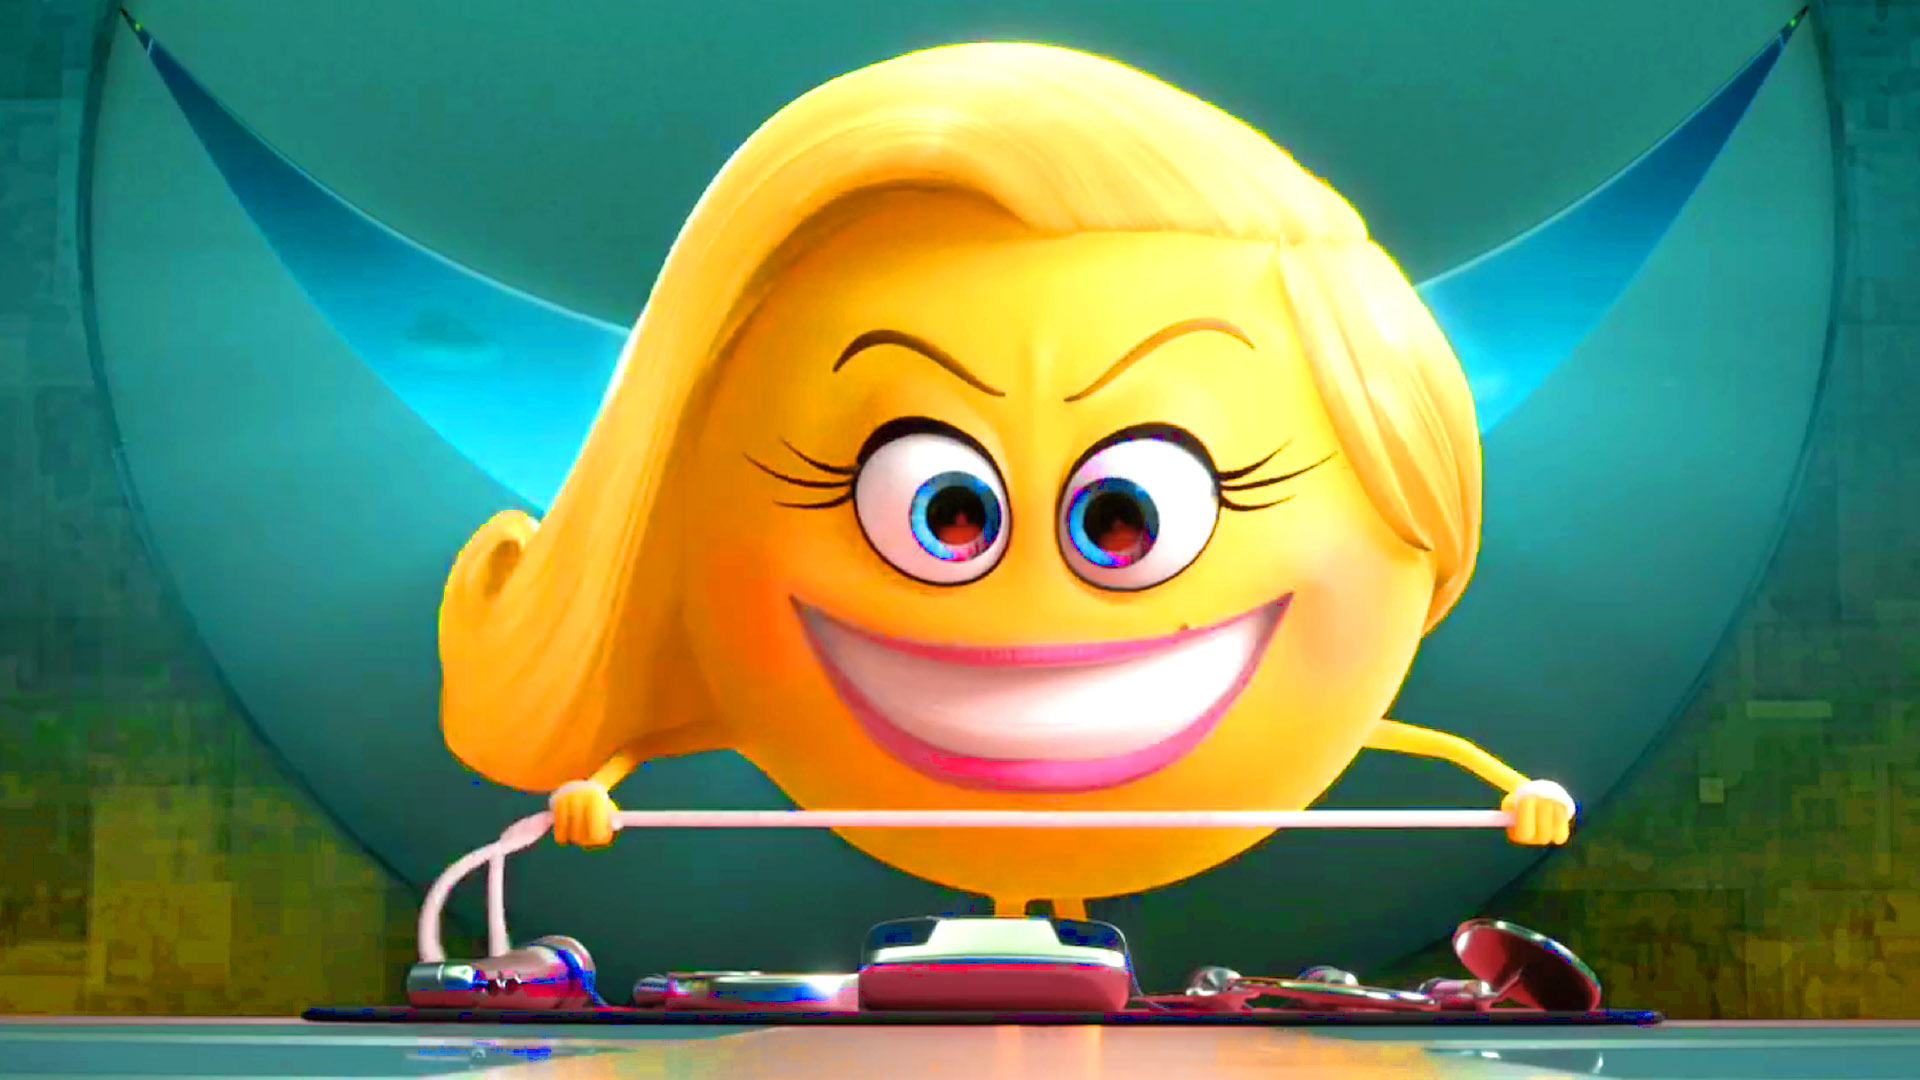 emoji movie free hd download